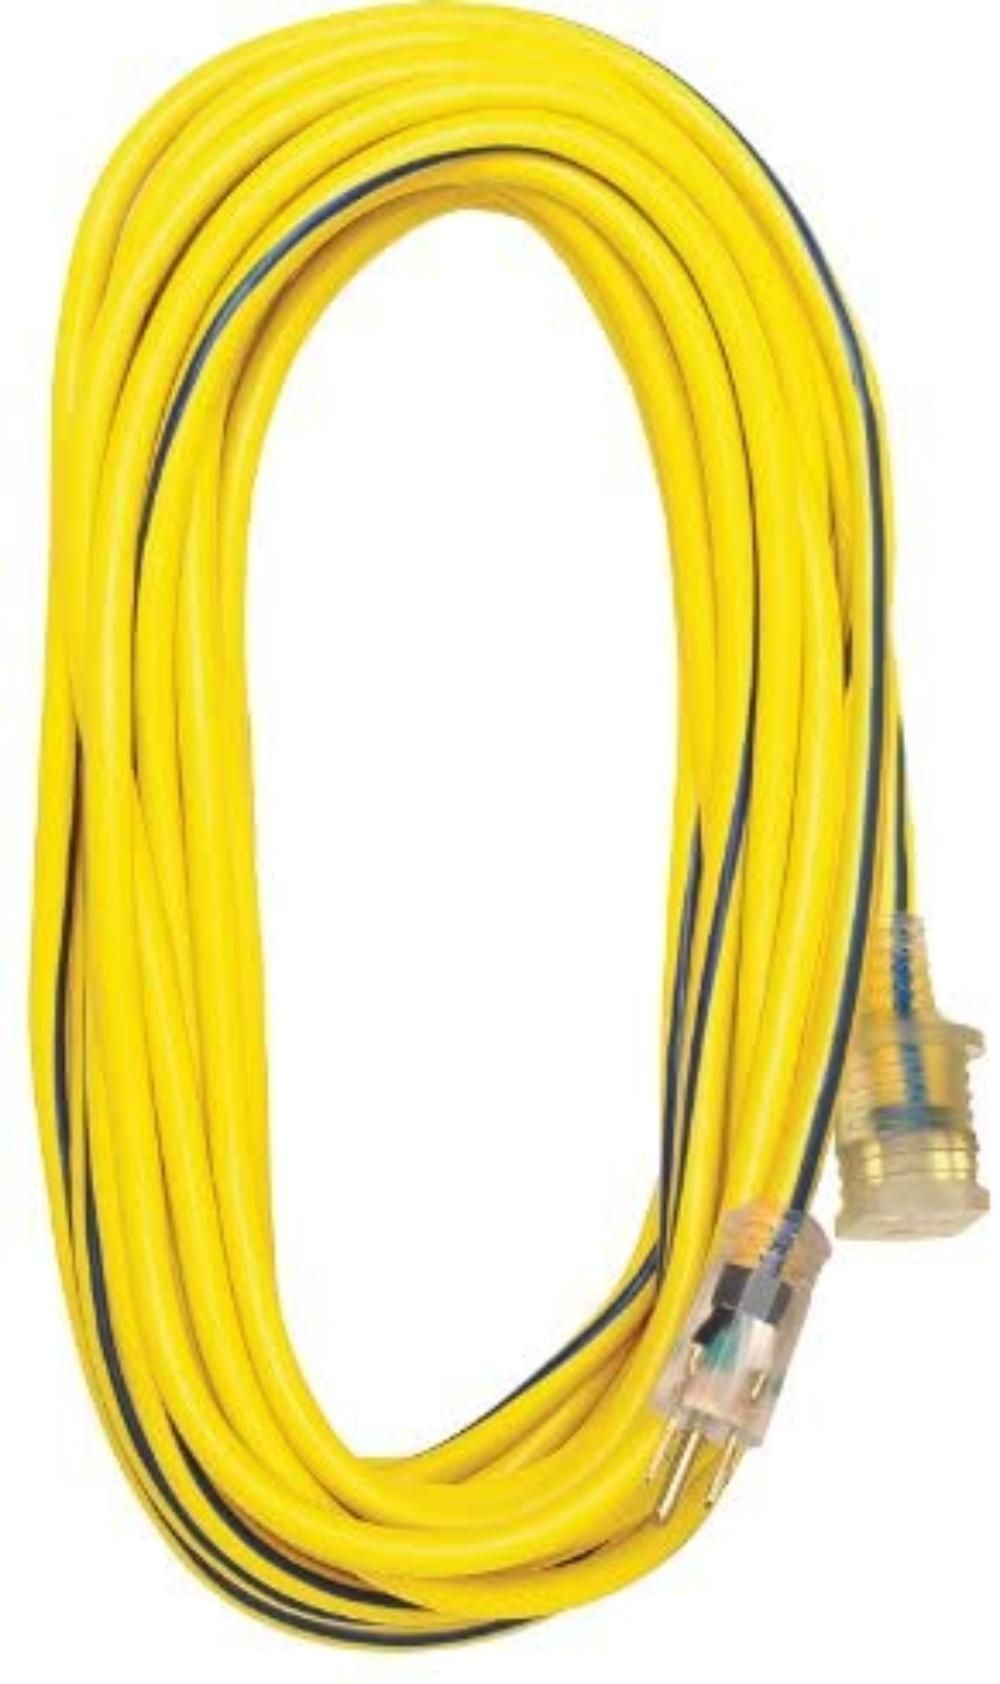 Extension cord 12ga 50'